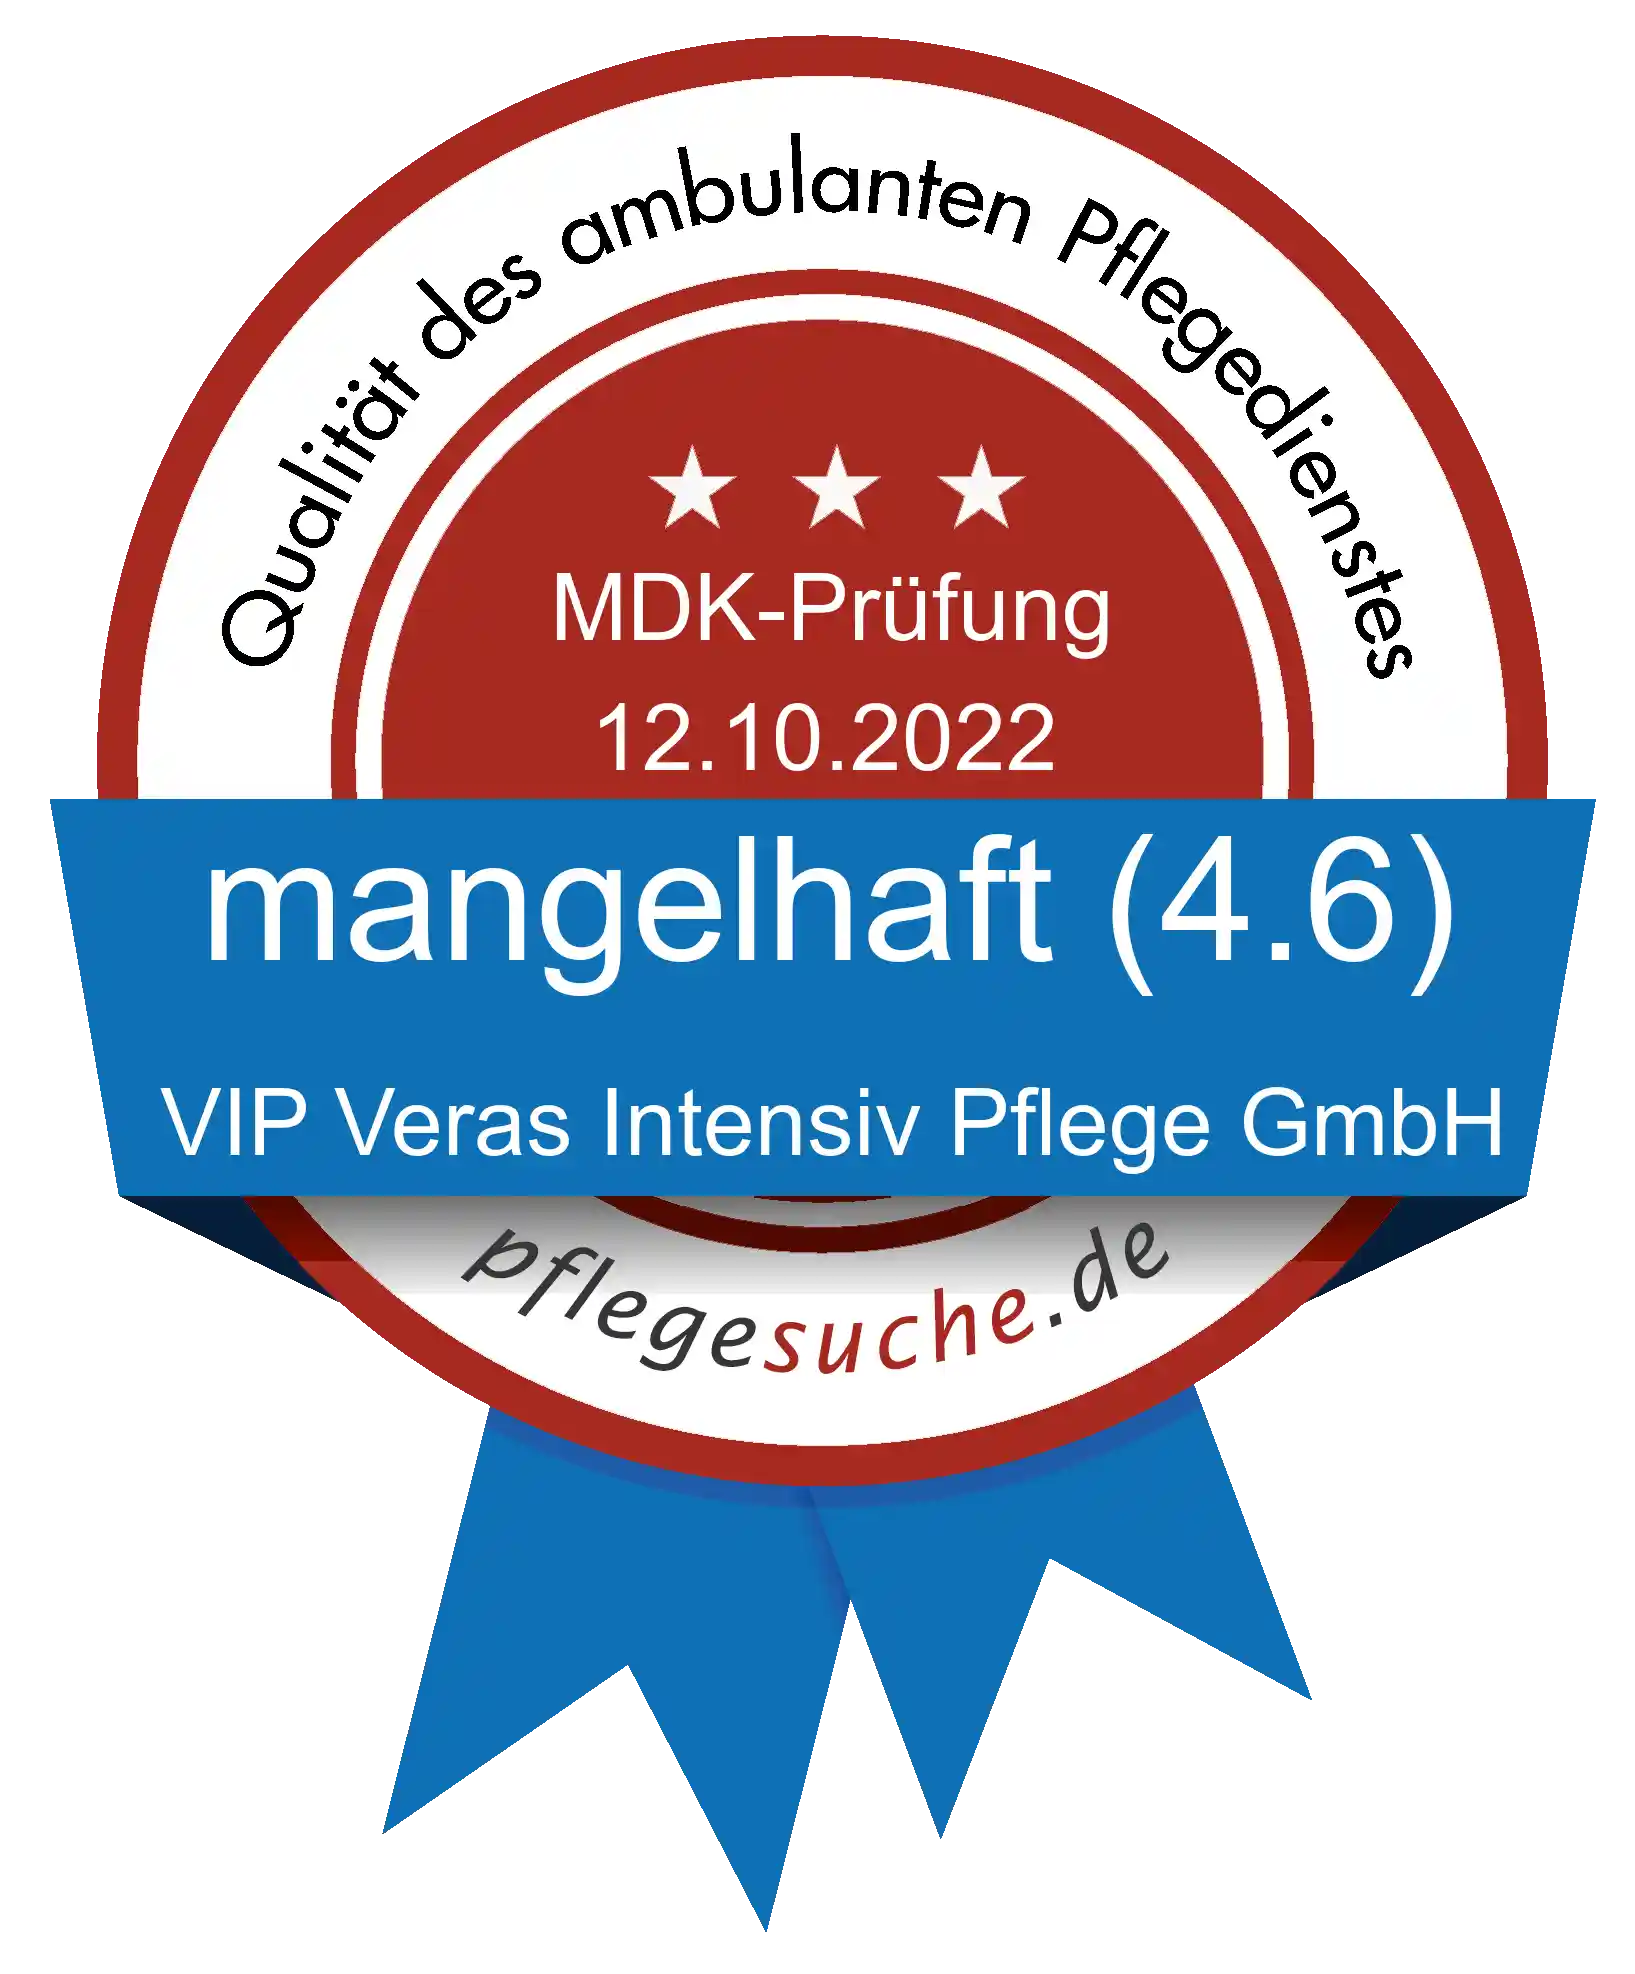 Siegel Benotung: VIP Veras Intensiv Pflege GmbH